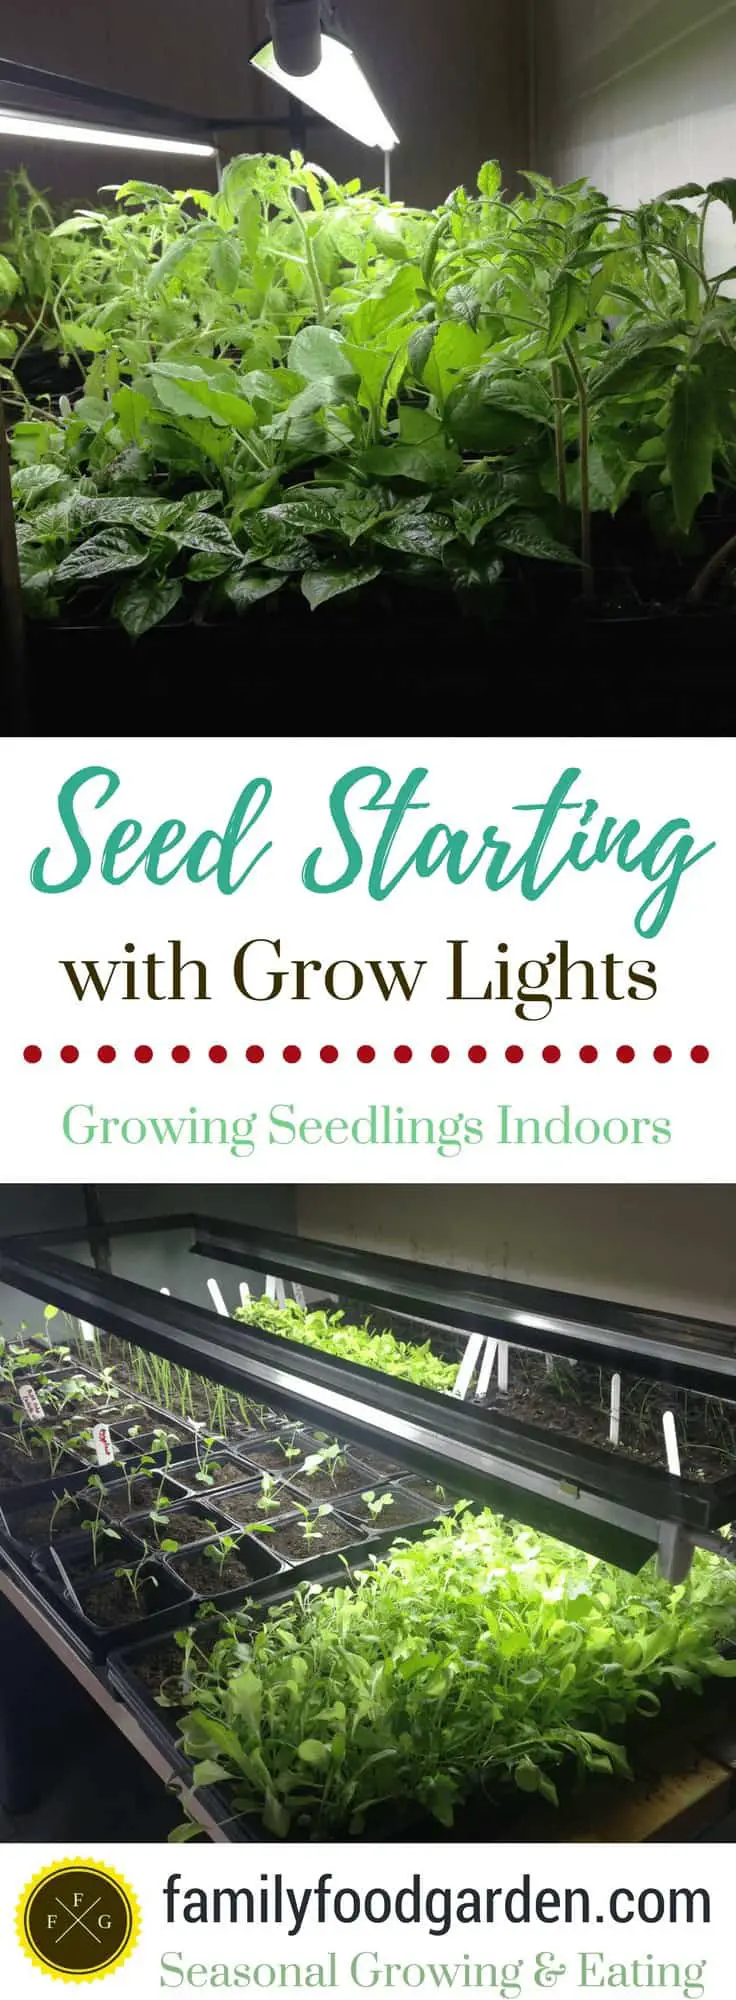 Seed Starting with Grow Lights: Growing Seedlings Indoors